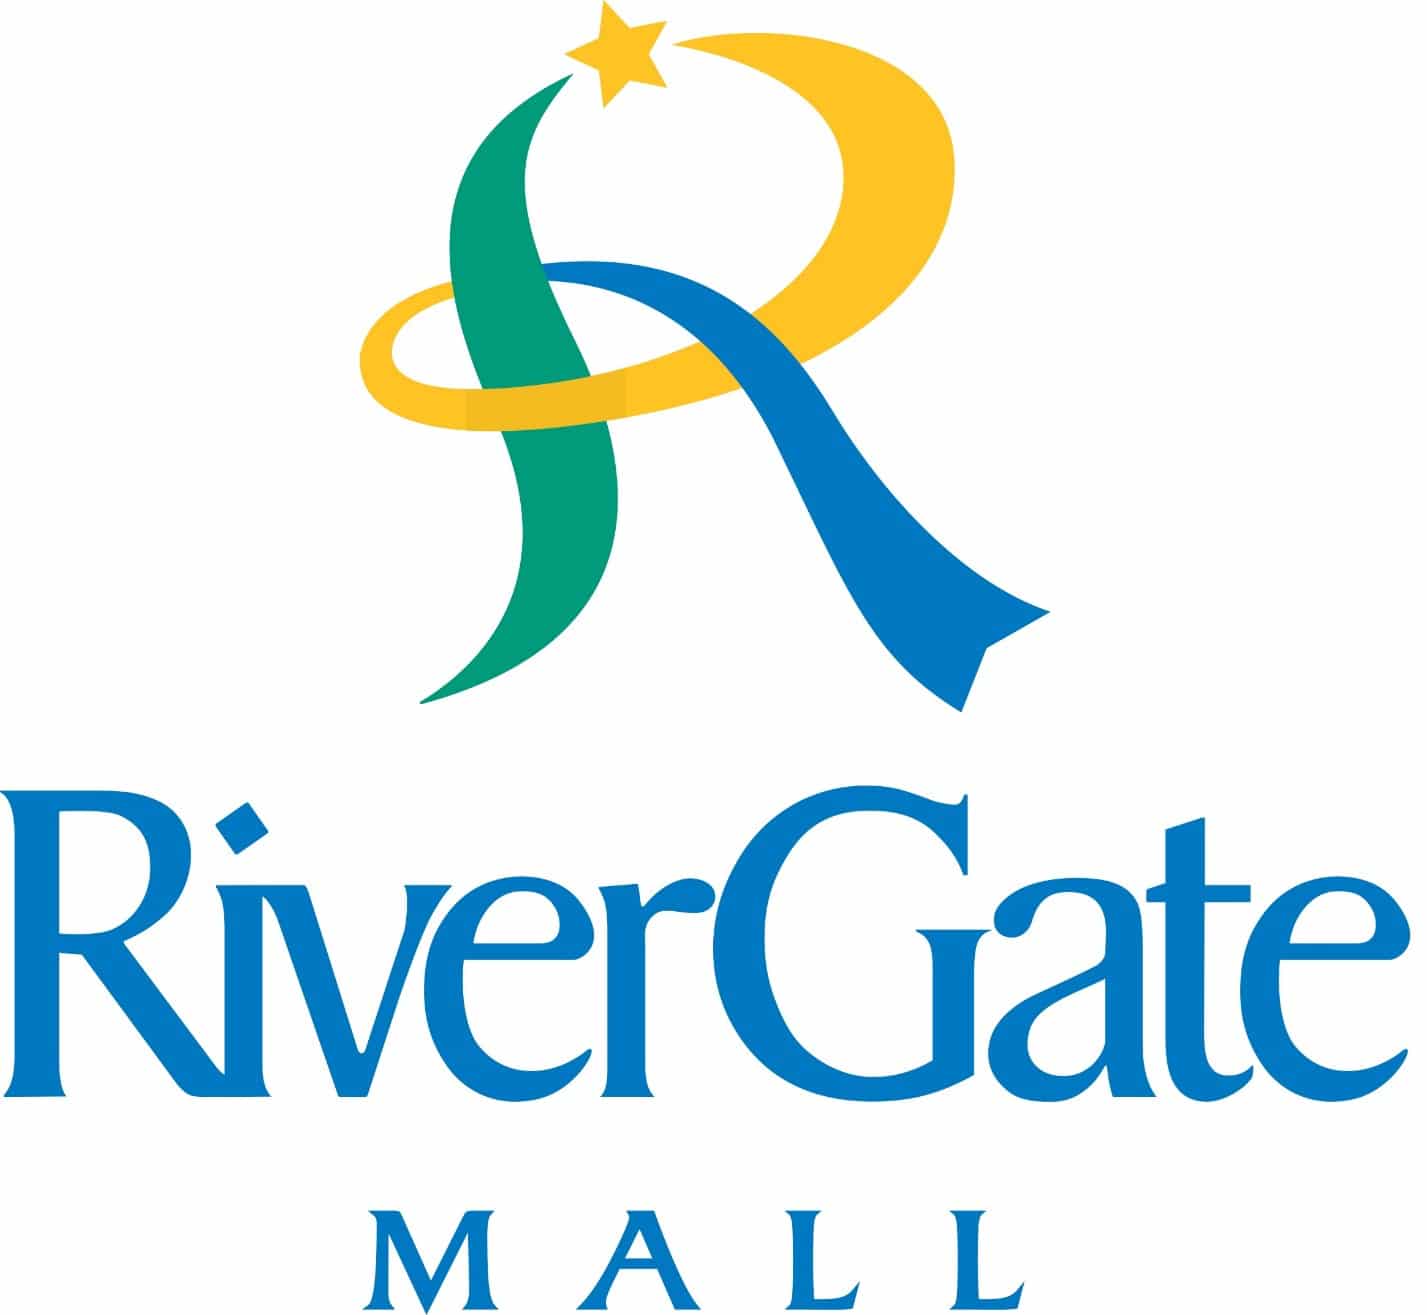 RGM logo - RiverGate Mall